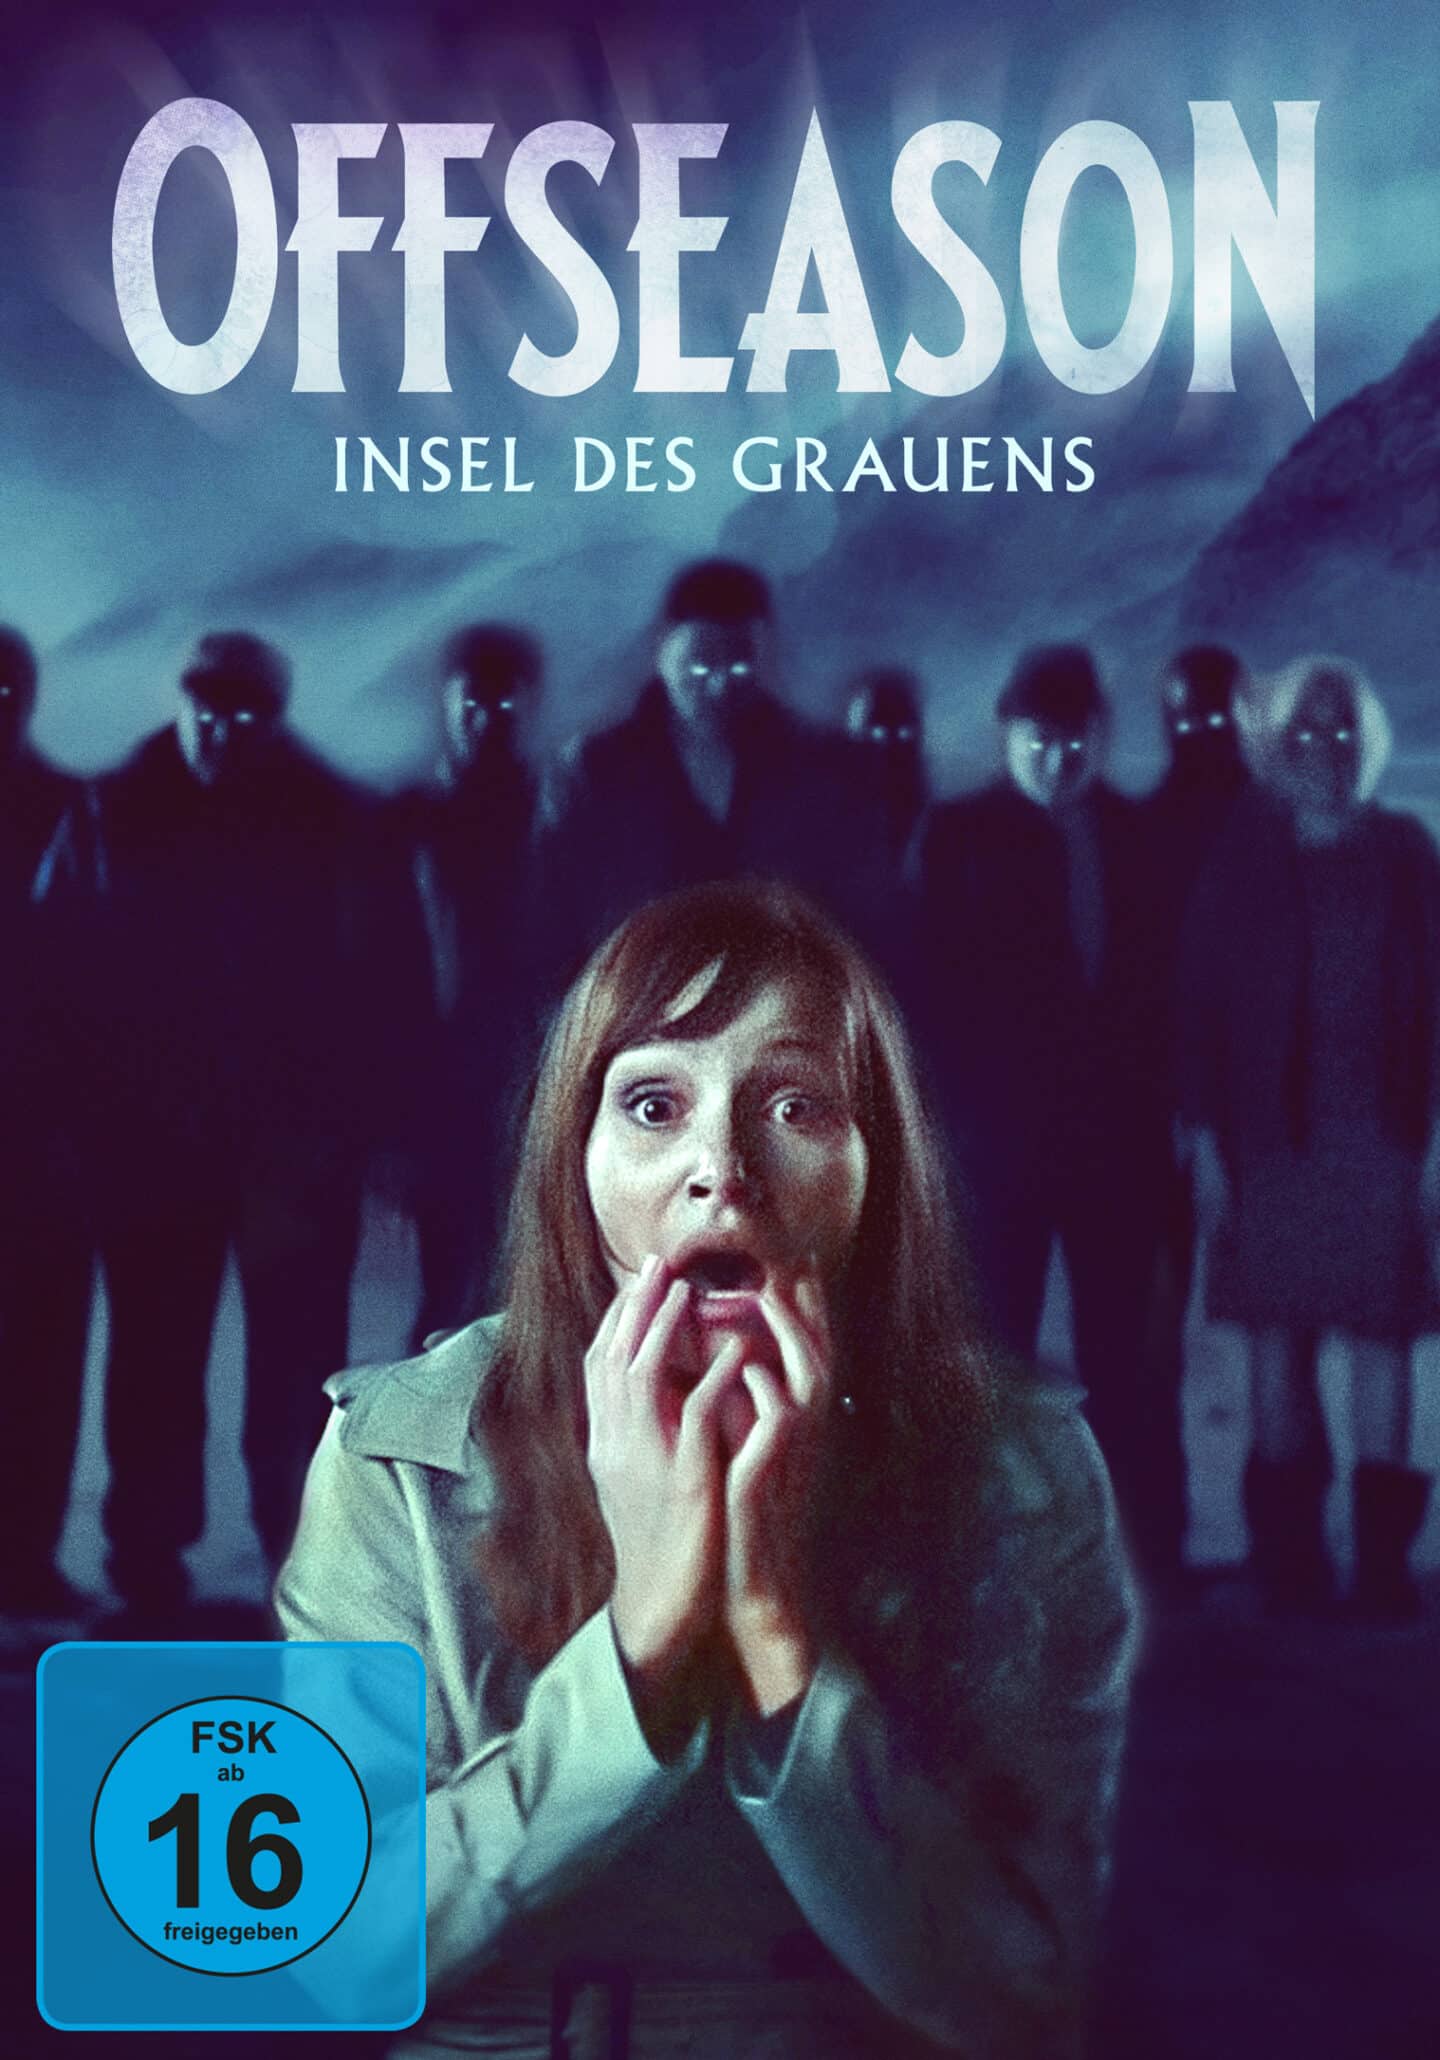 Offseason - Insel des Grauens - DVD Cover